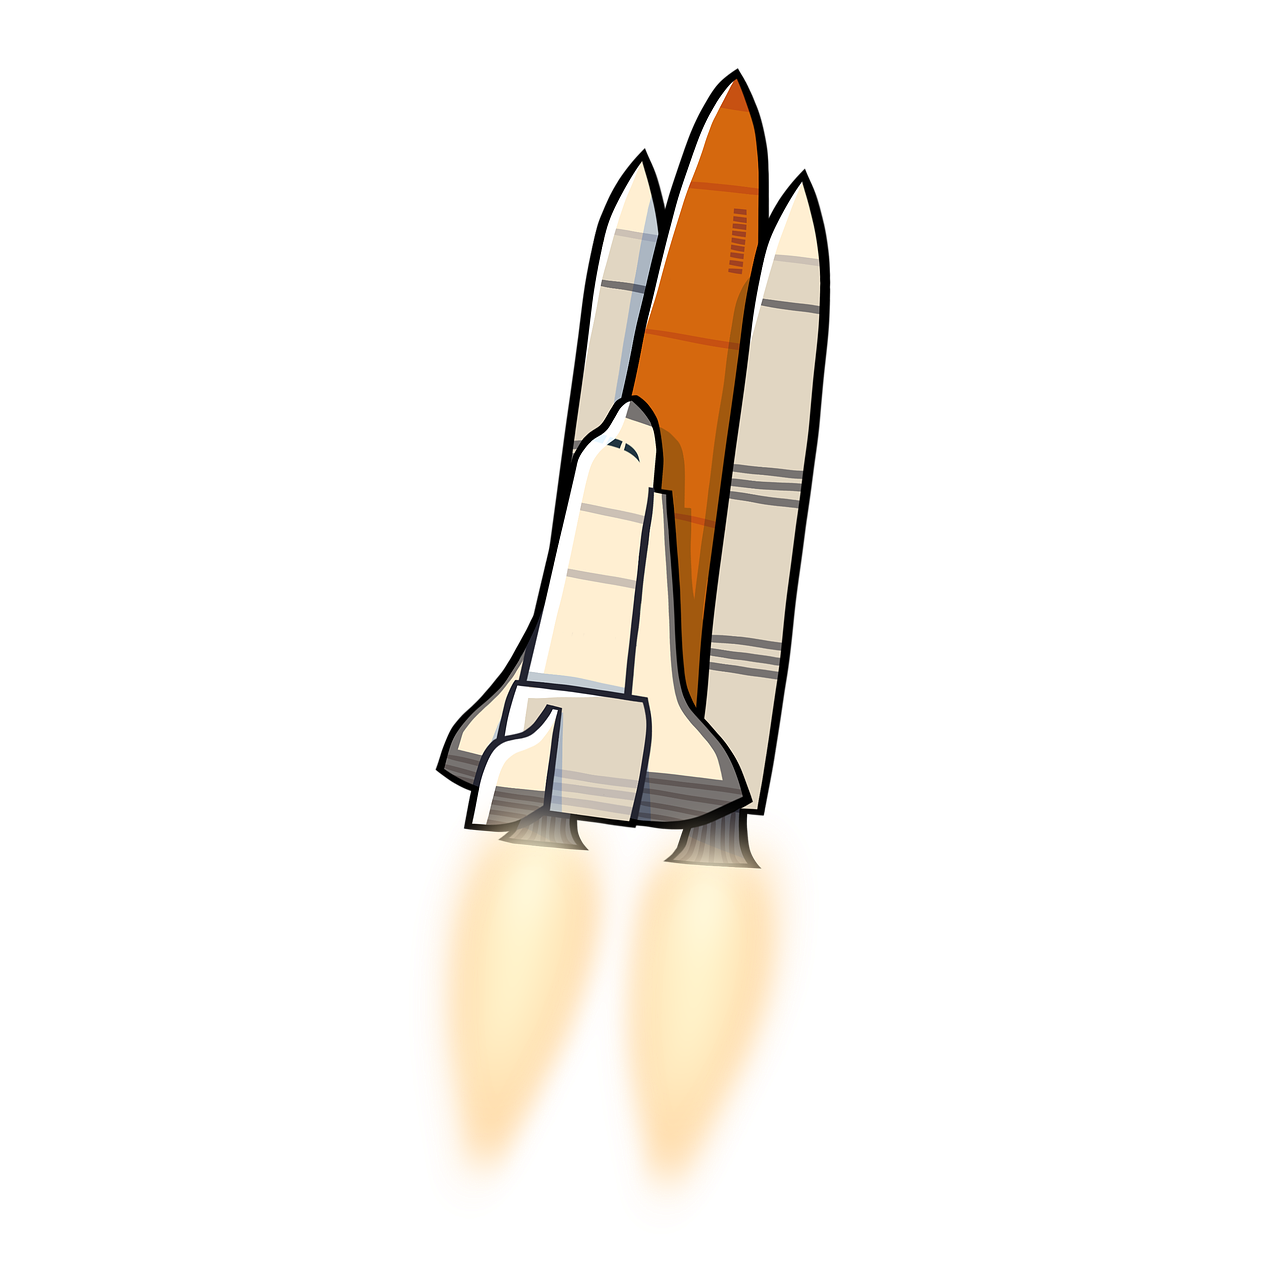 Space Shuttle Rocket Illustration